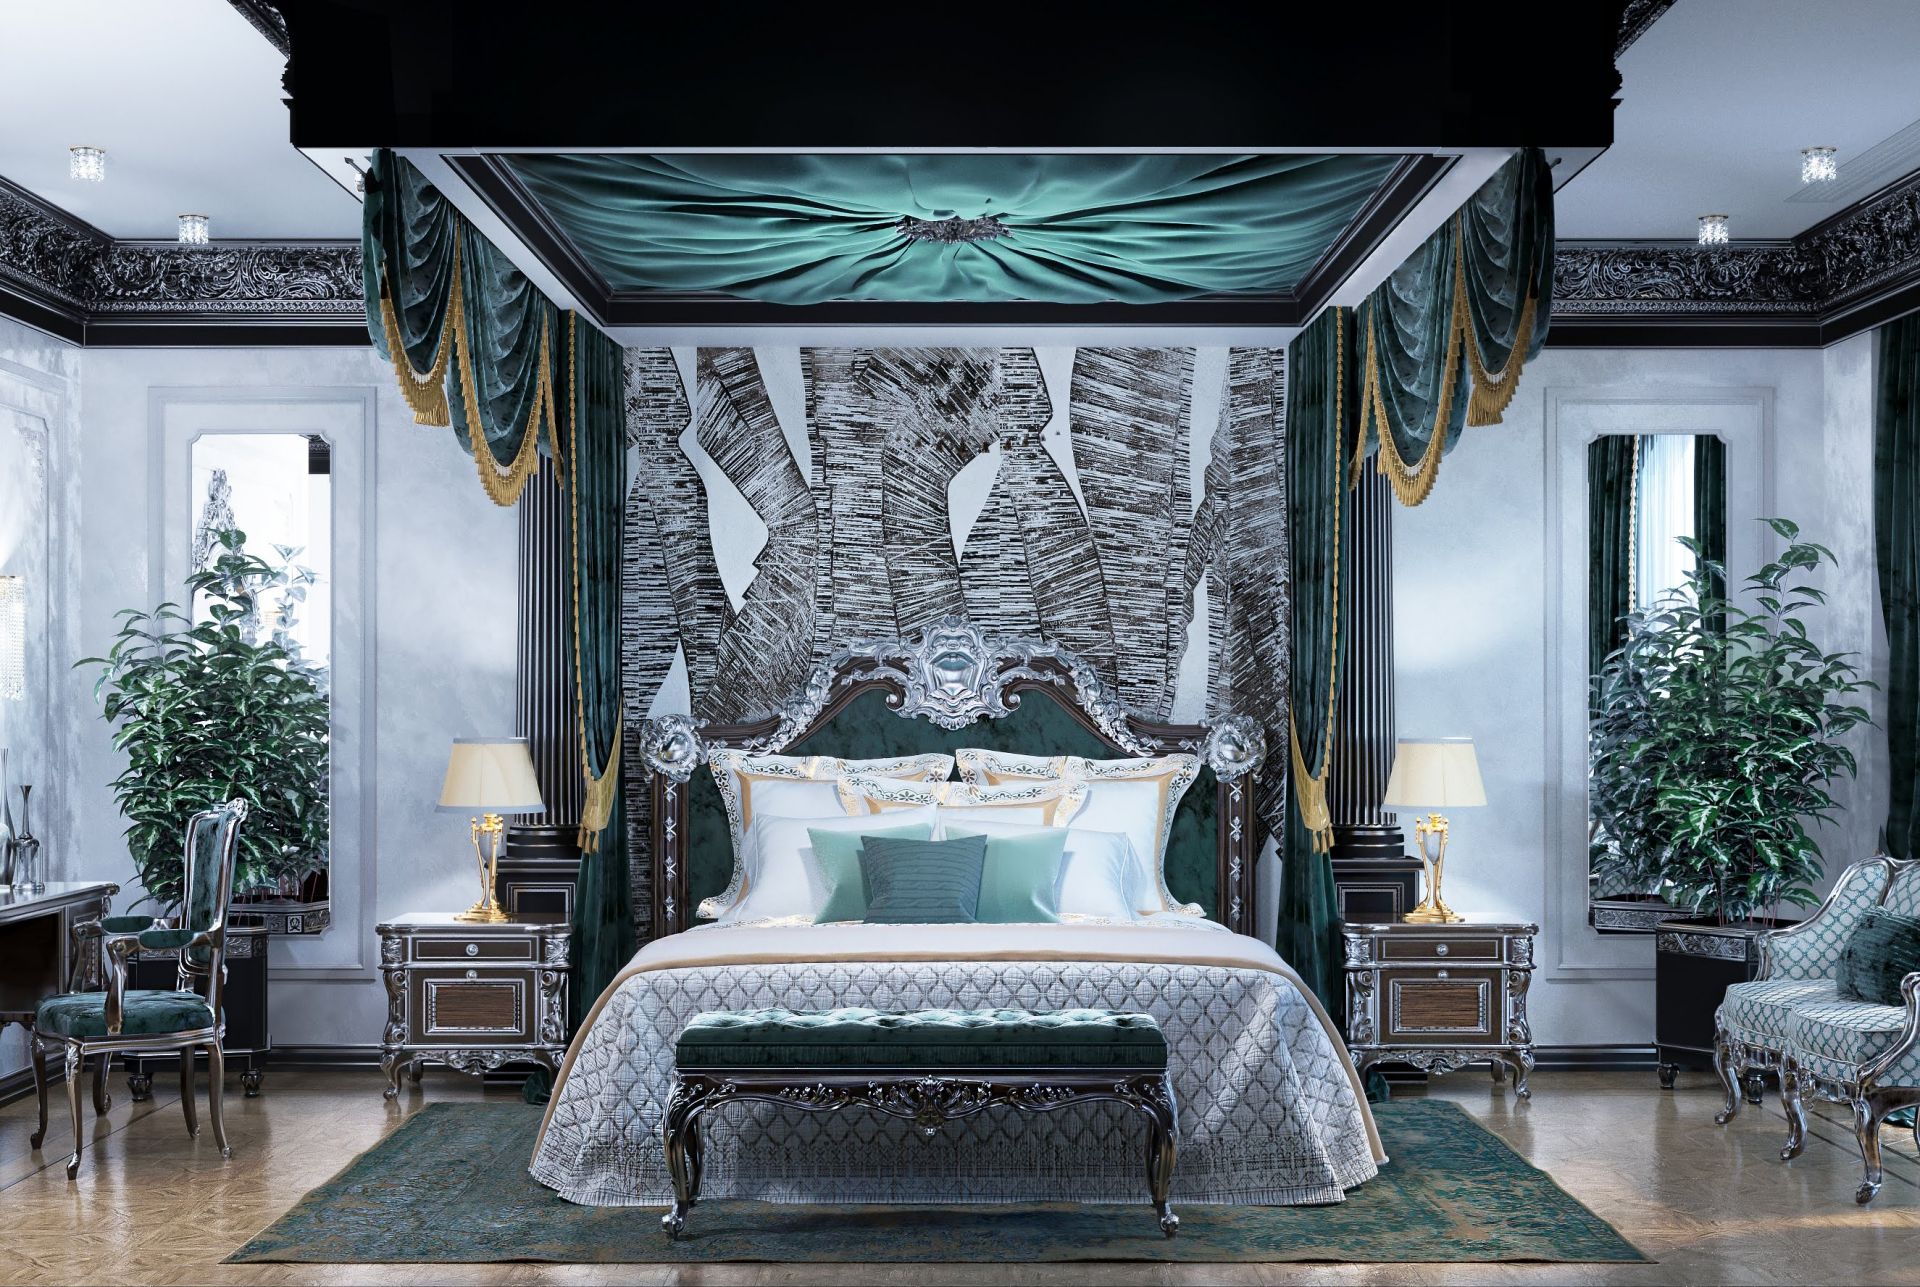 Royal bedroom interior design